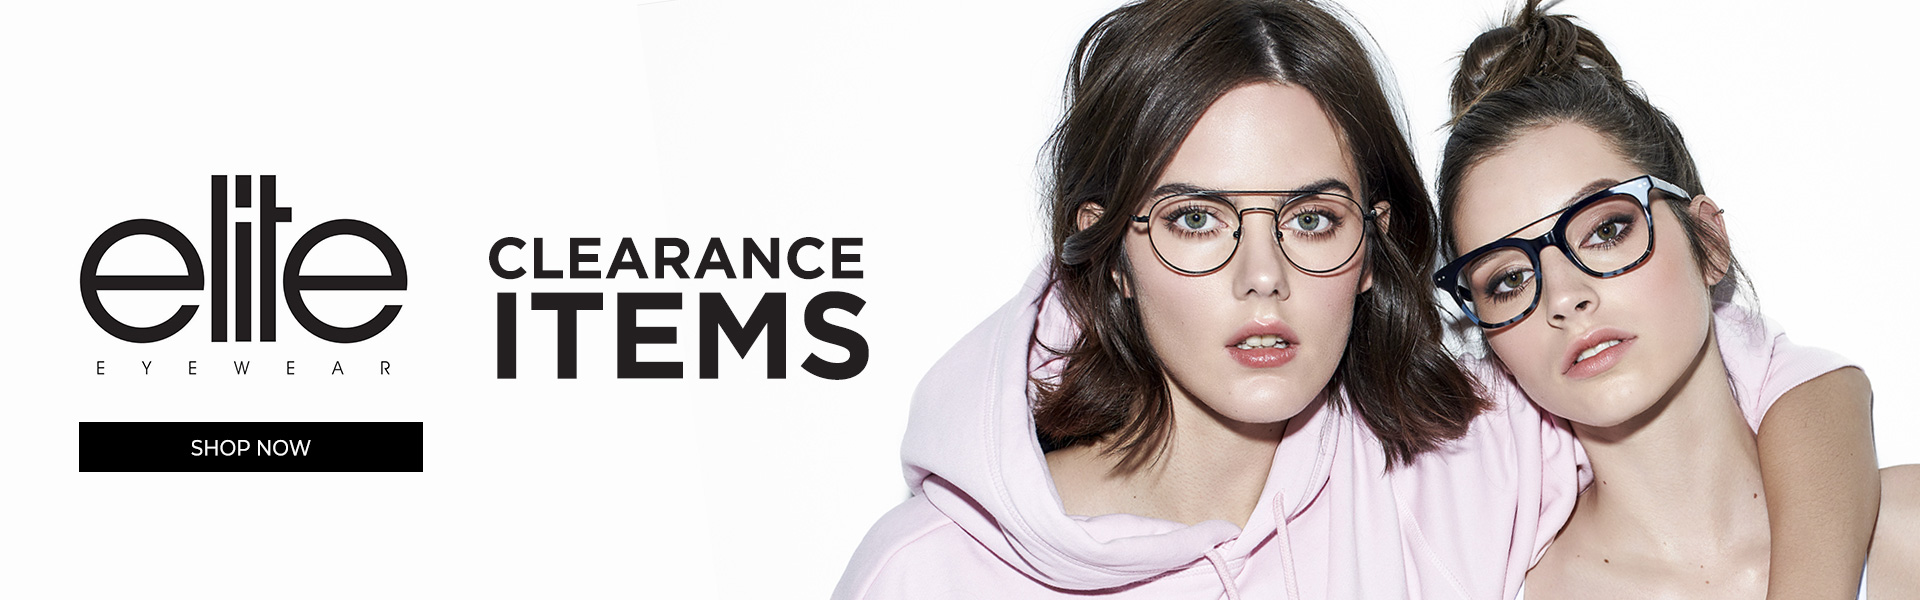 Elite eyewear - clearance items!